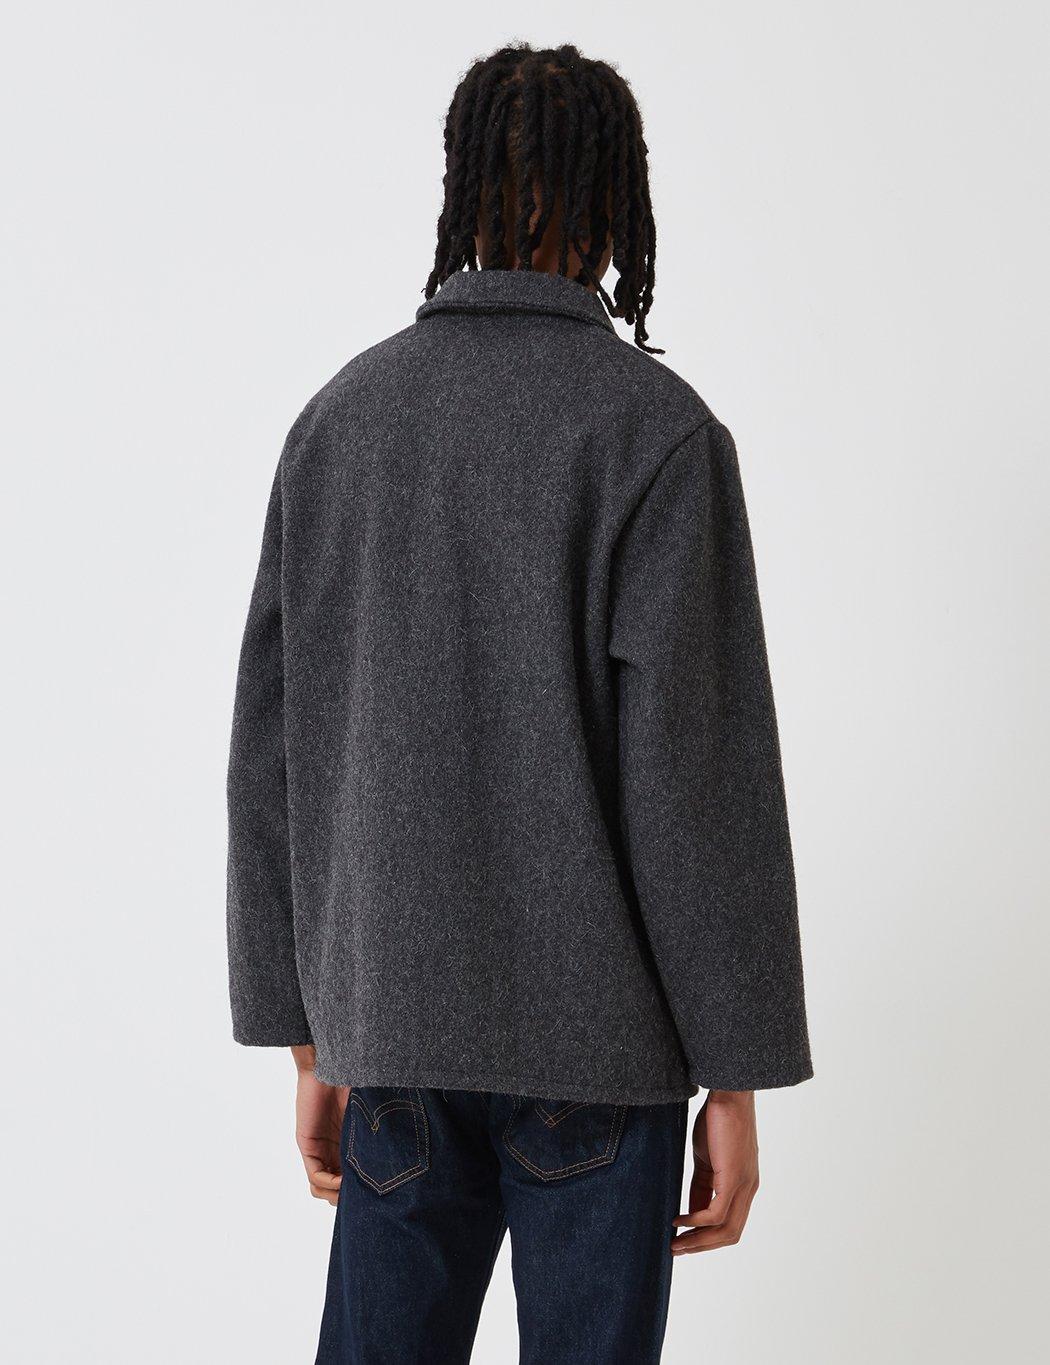 Le Laboureur Wool Work Jacket in Grey (Gray) for Men  Lyst